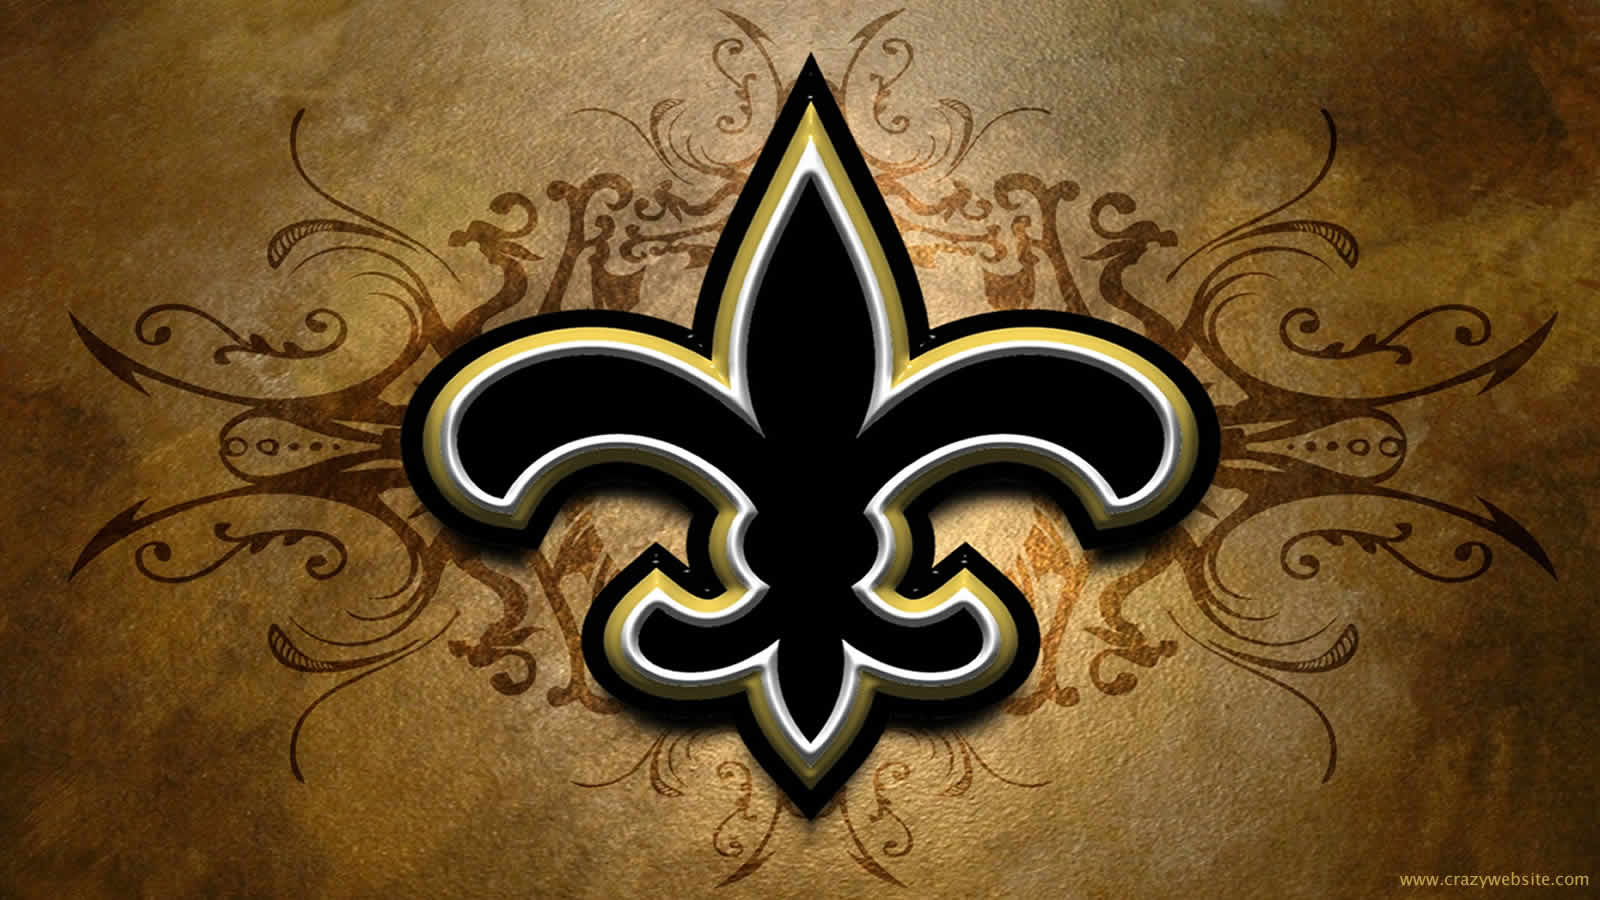 Free download New Orleans Saints NFL football team logo wallpaper